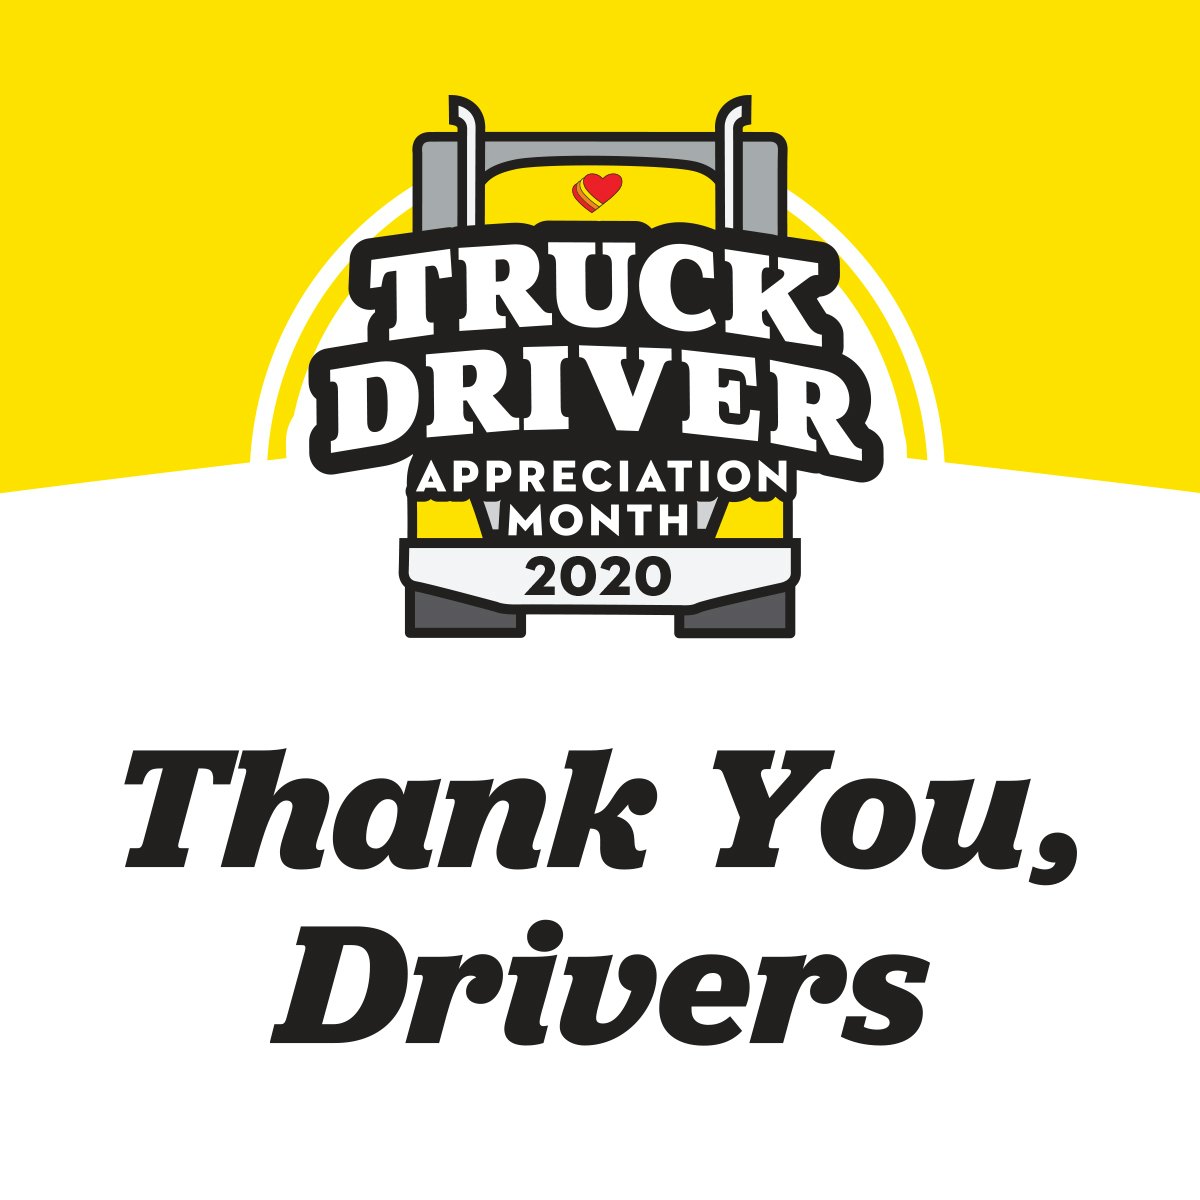 National Truck Driver Appreciation Week - Diesel Driving